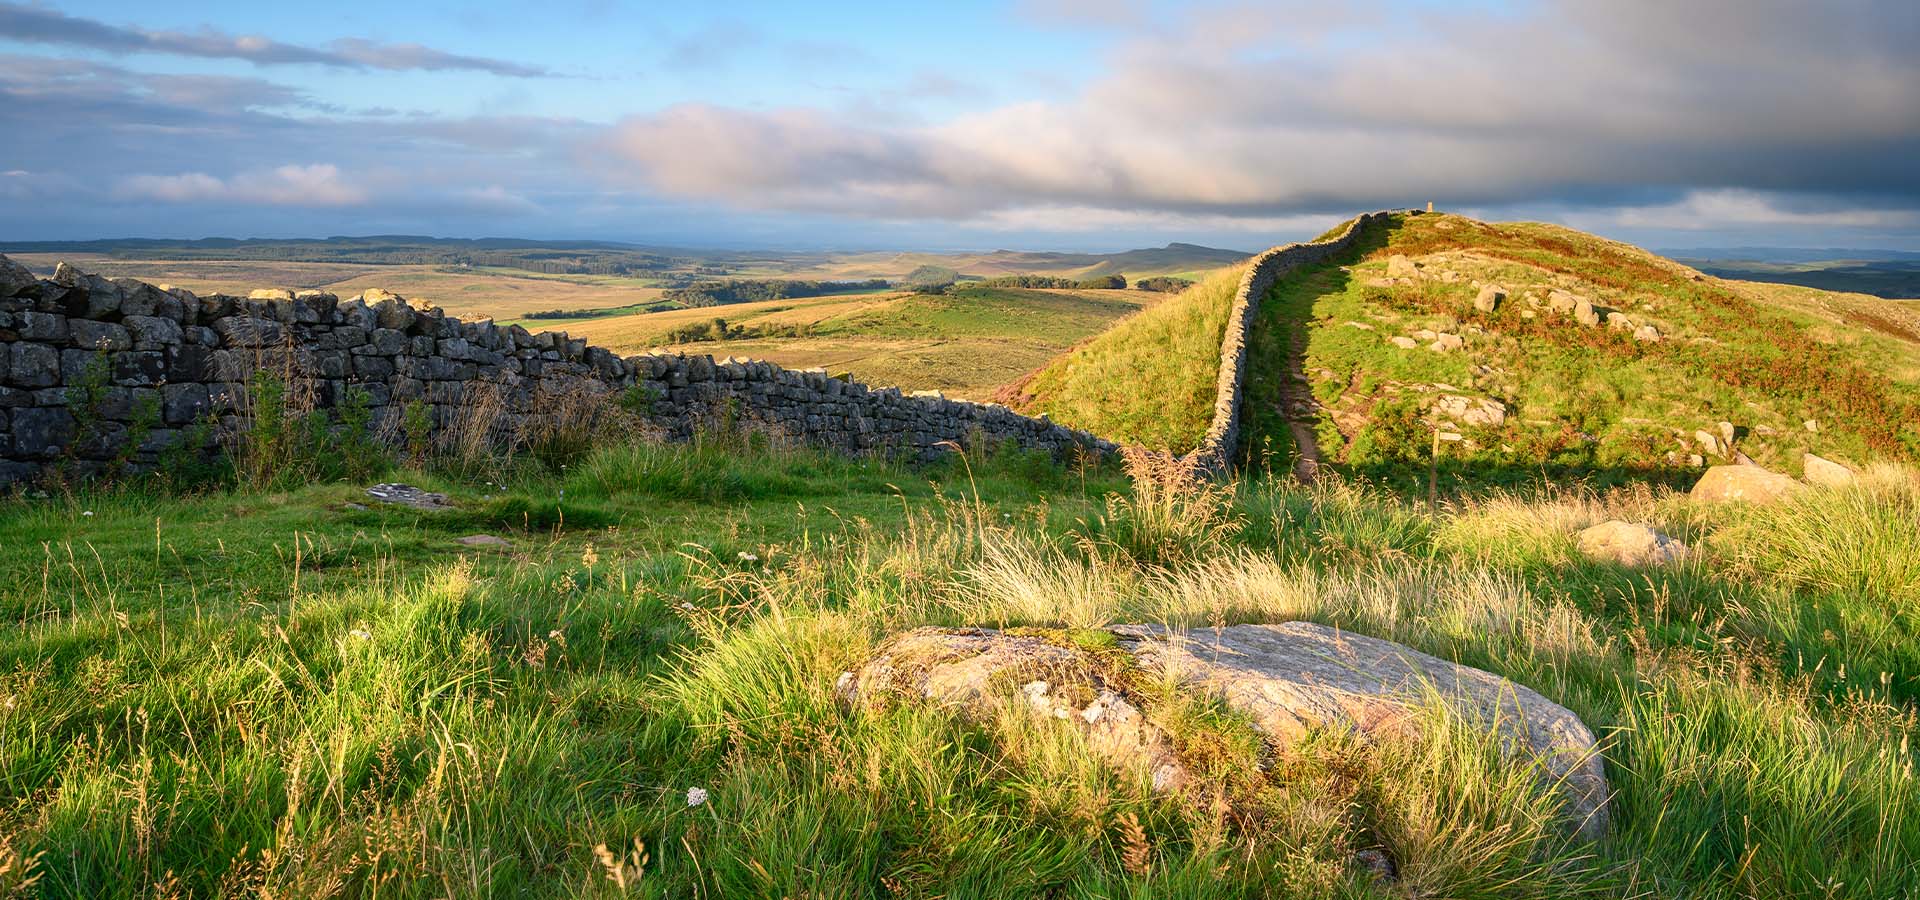 Hadrian's Wall Image